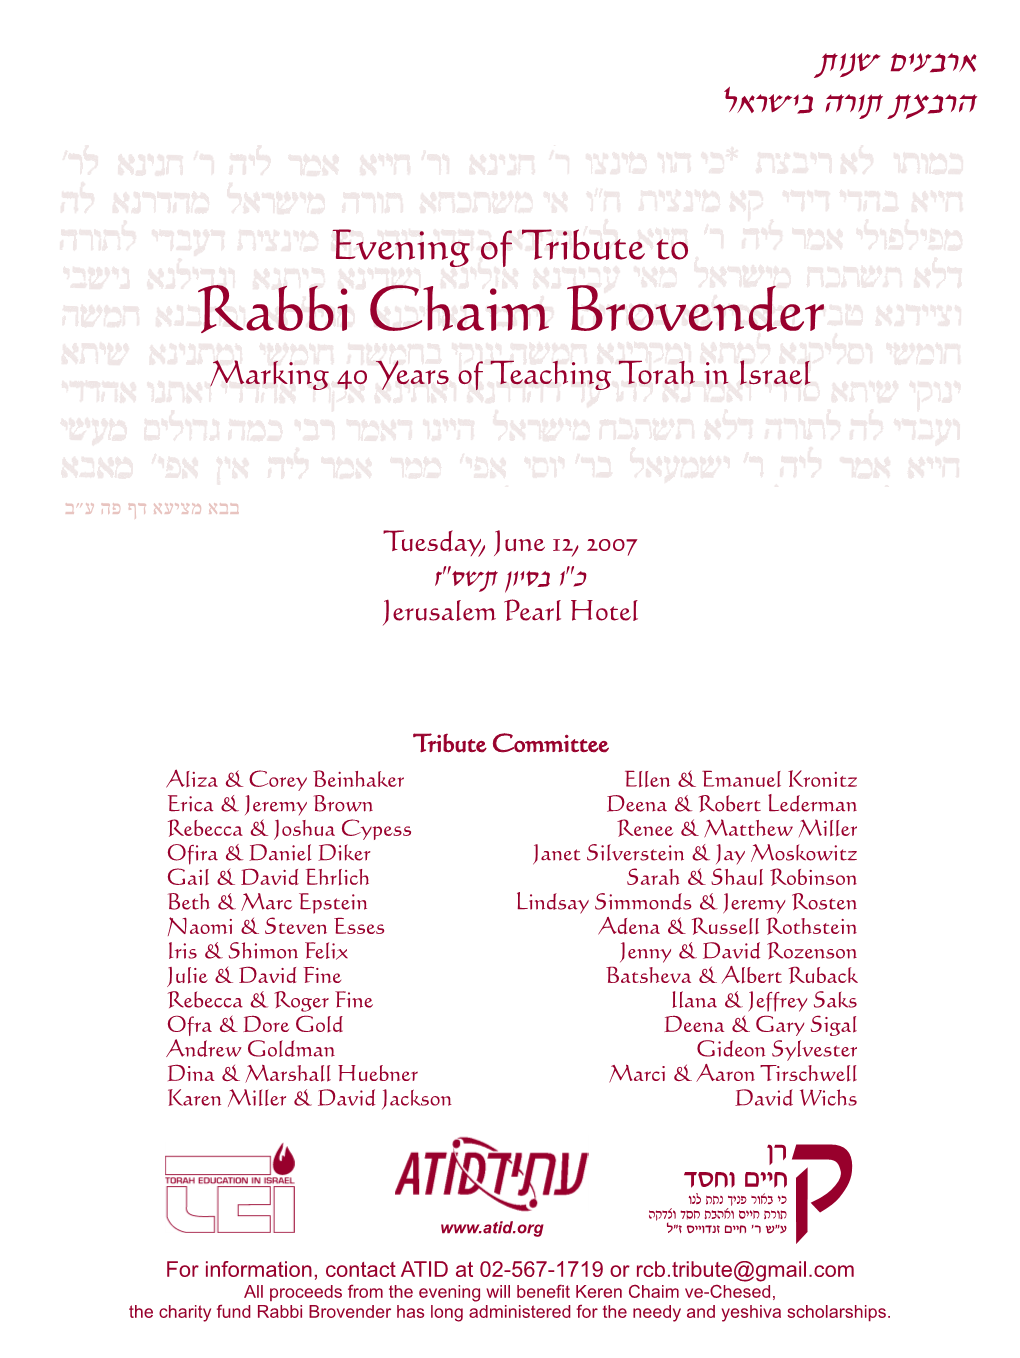 Rabbi Chaim Brovender Marking 40 Years of Teaching Torah in Israel